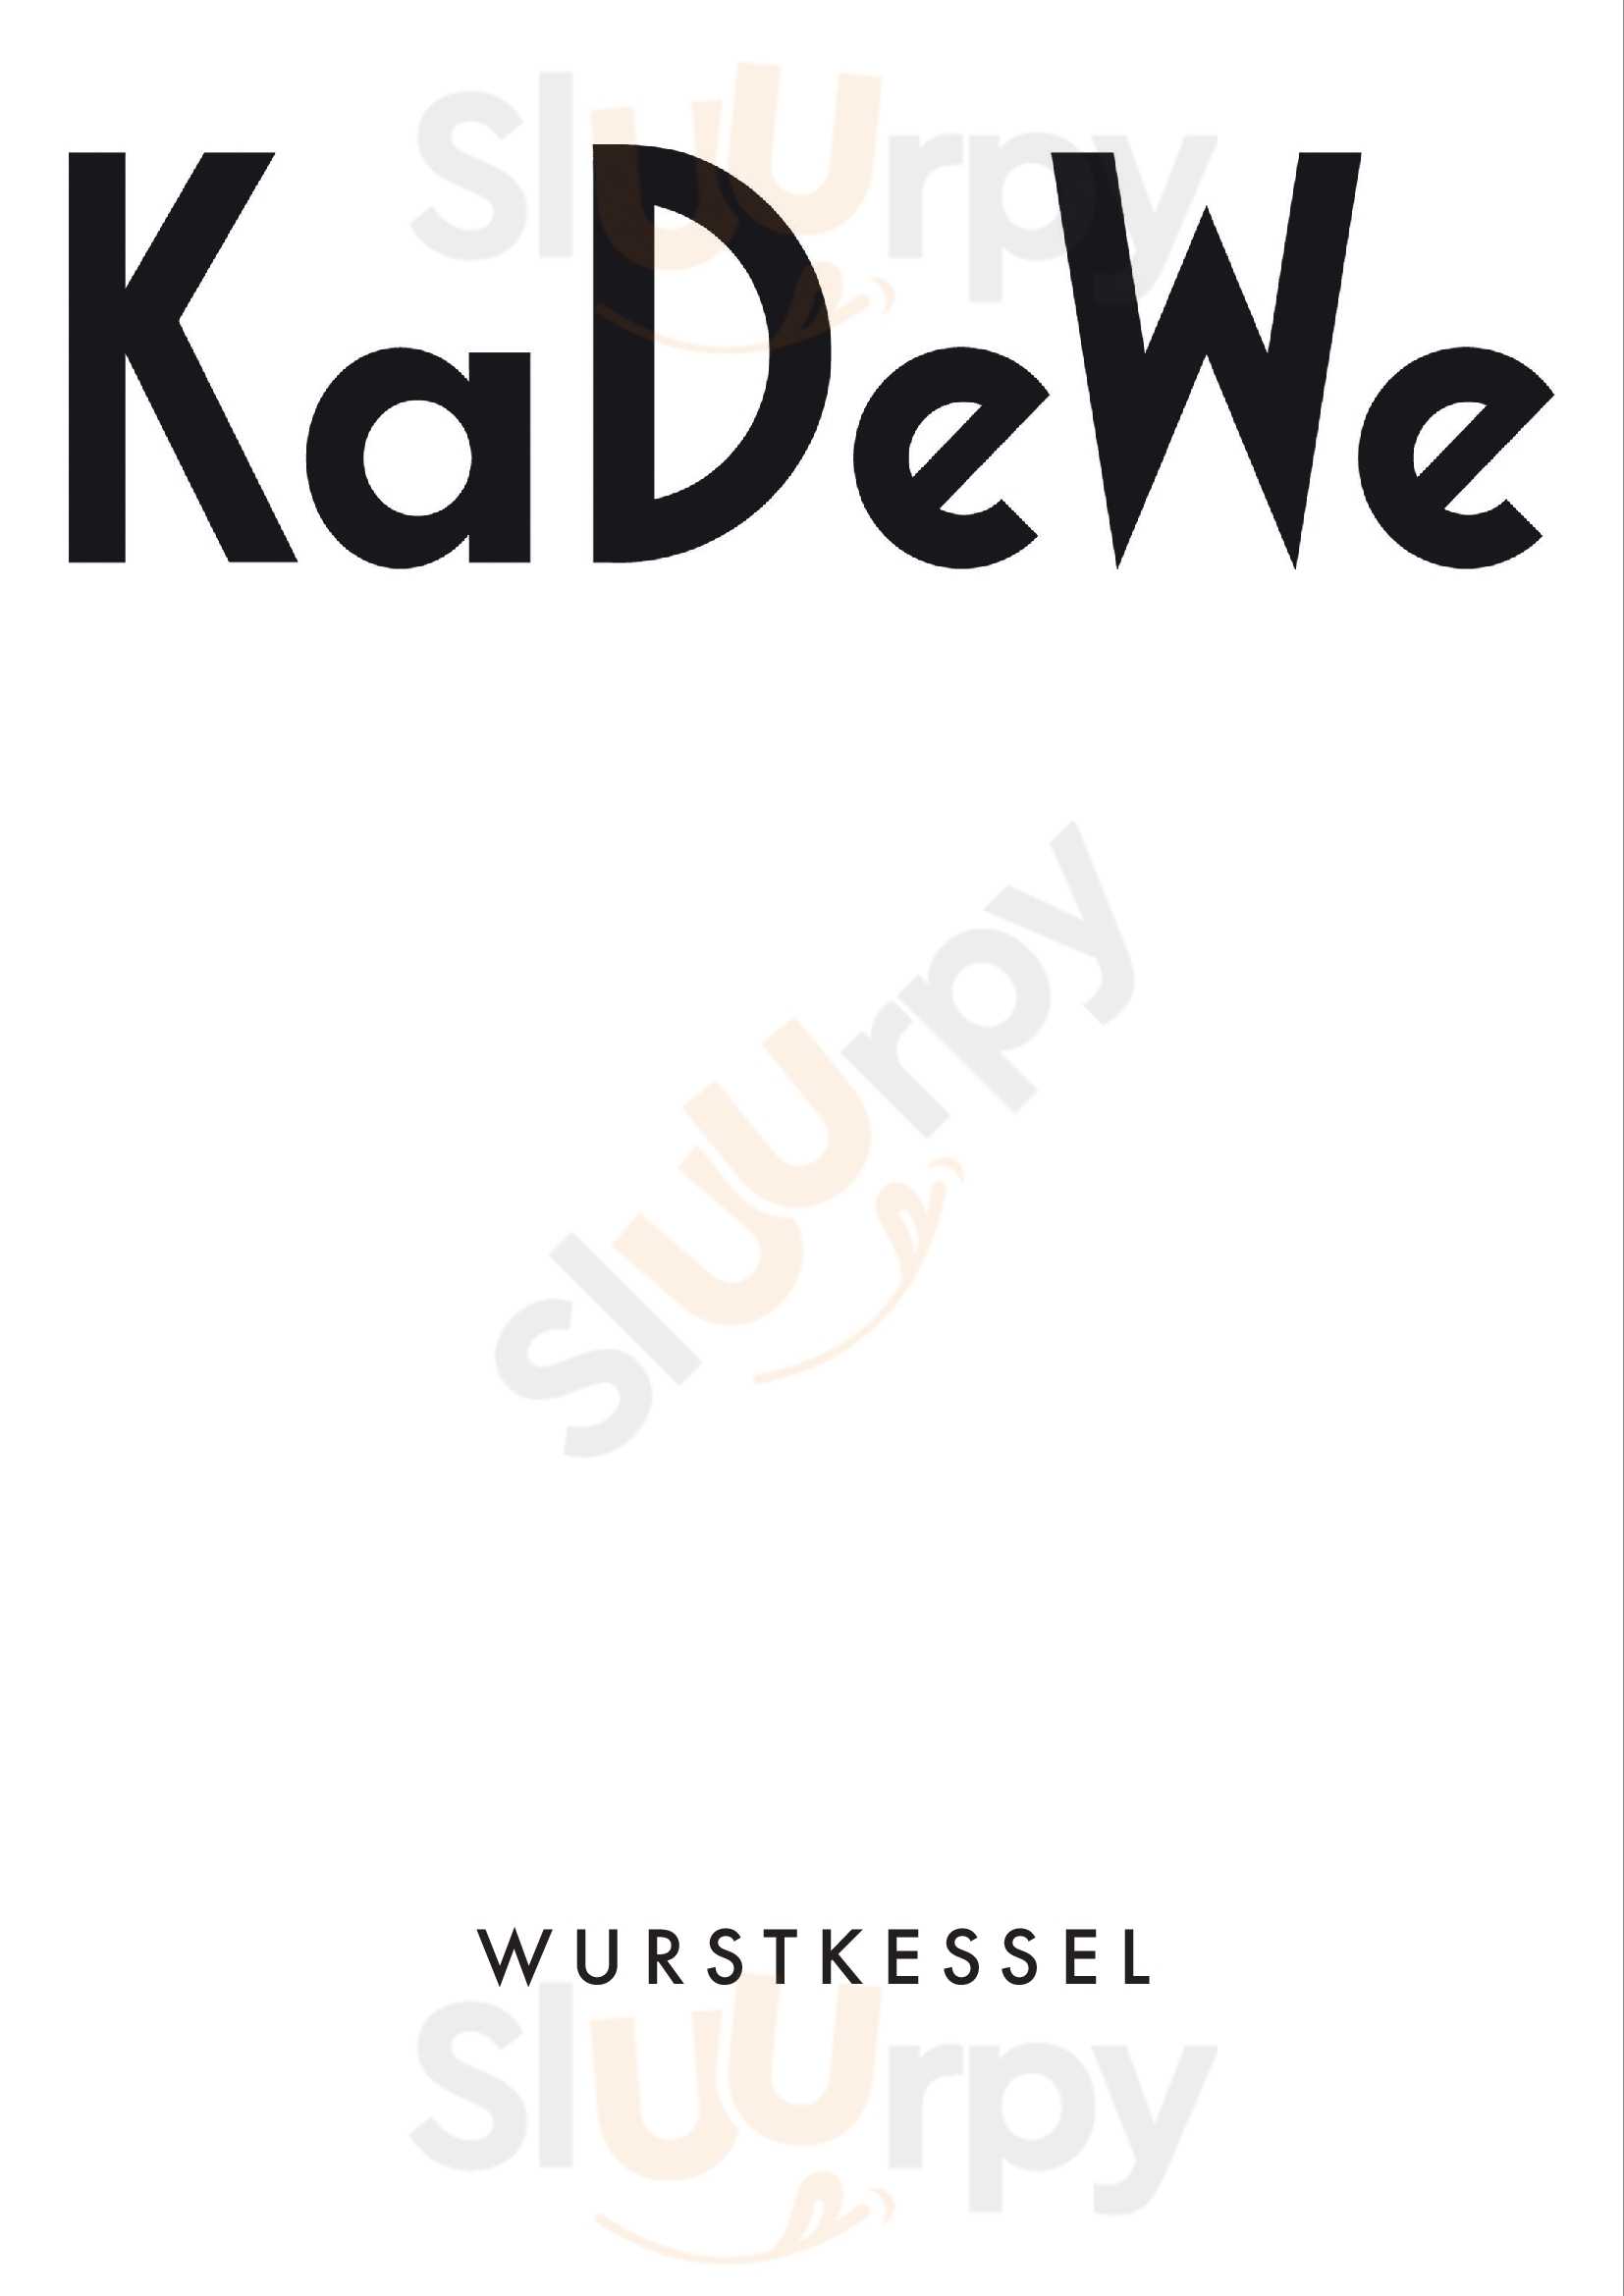 Wurstkessel Im Kadewe Berlin Menu - 1